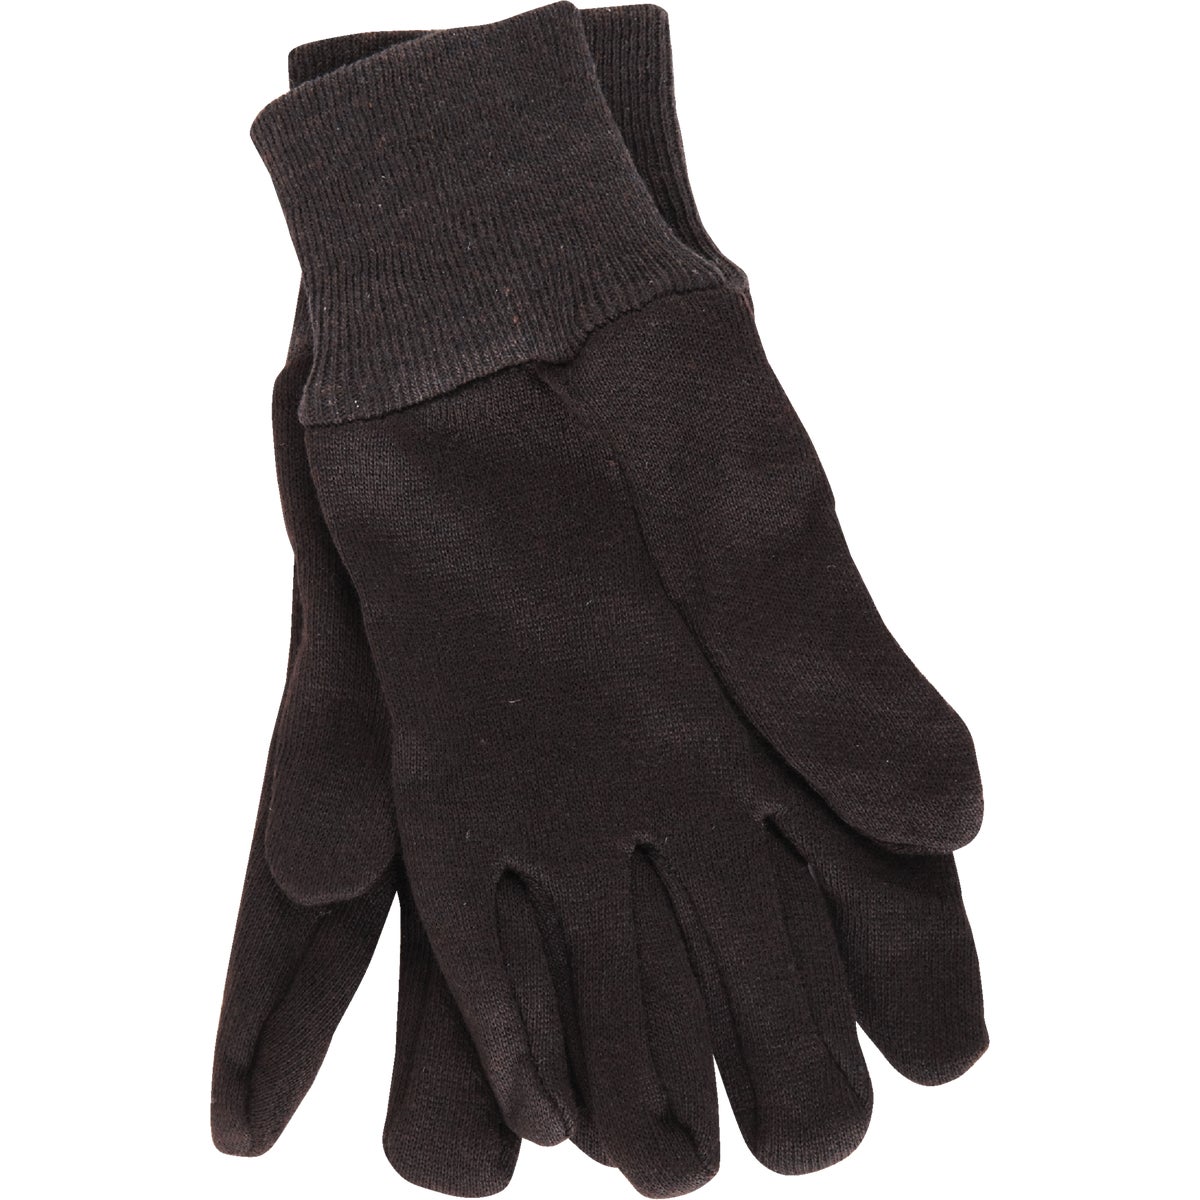 Item 995762, Poly/cotton blend jersey glove. Features clute-cut design, knit wrist.